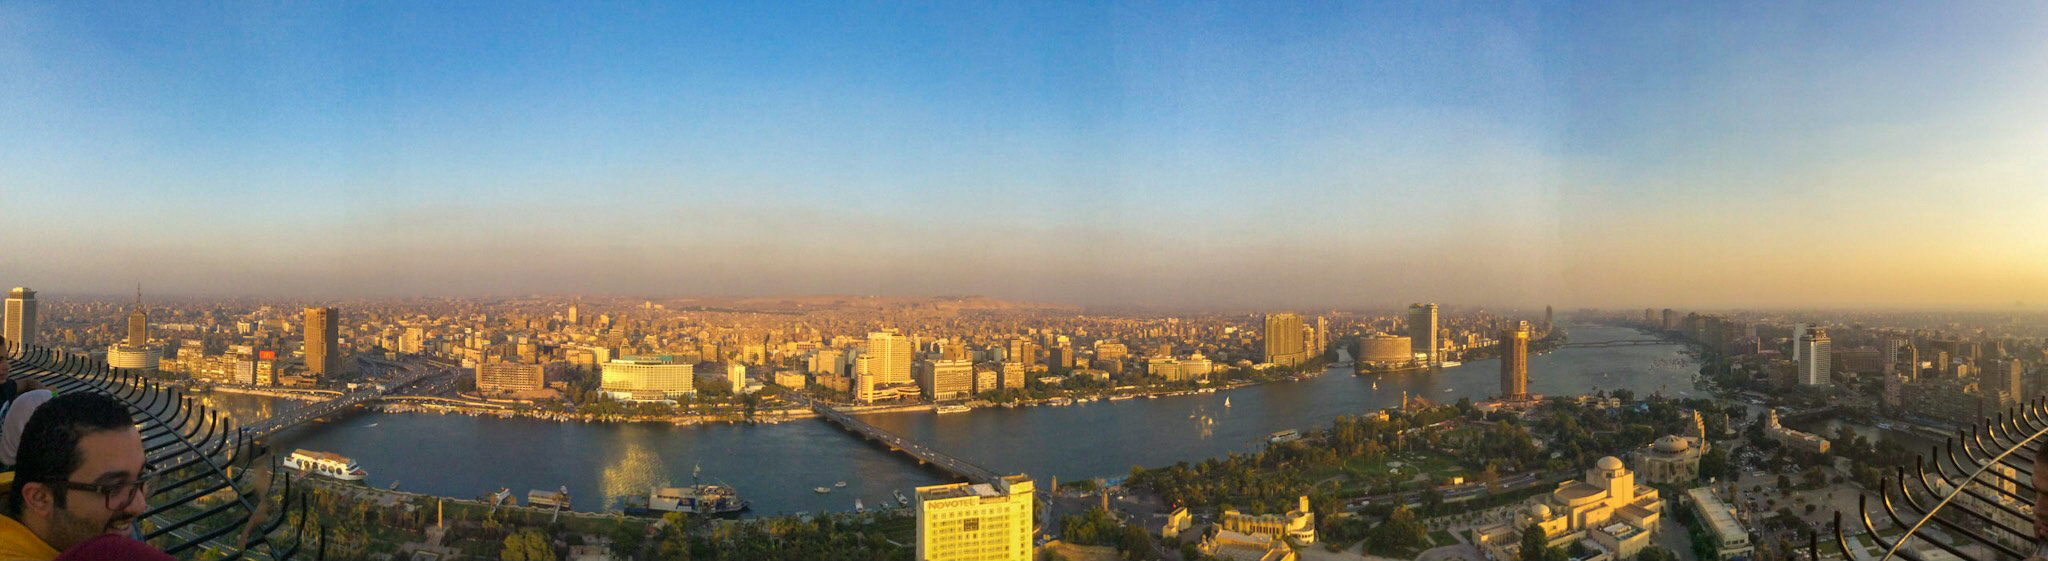 2-239 Cairo Pollution